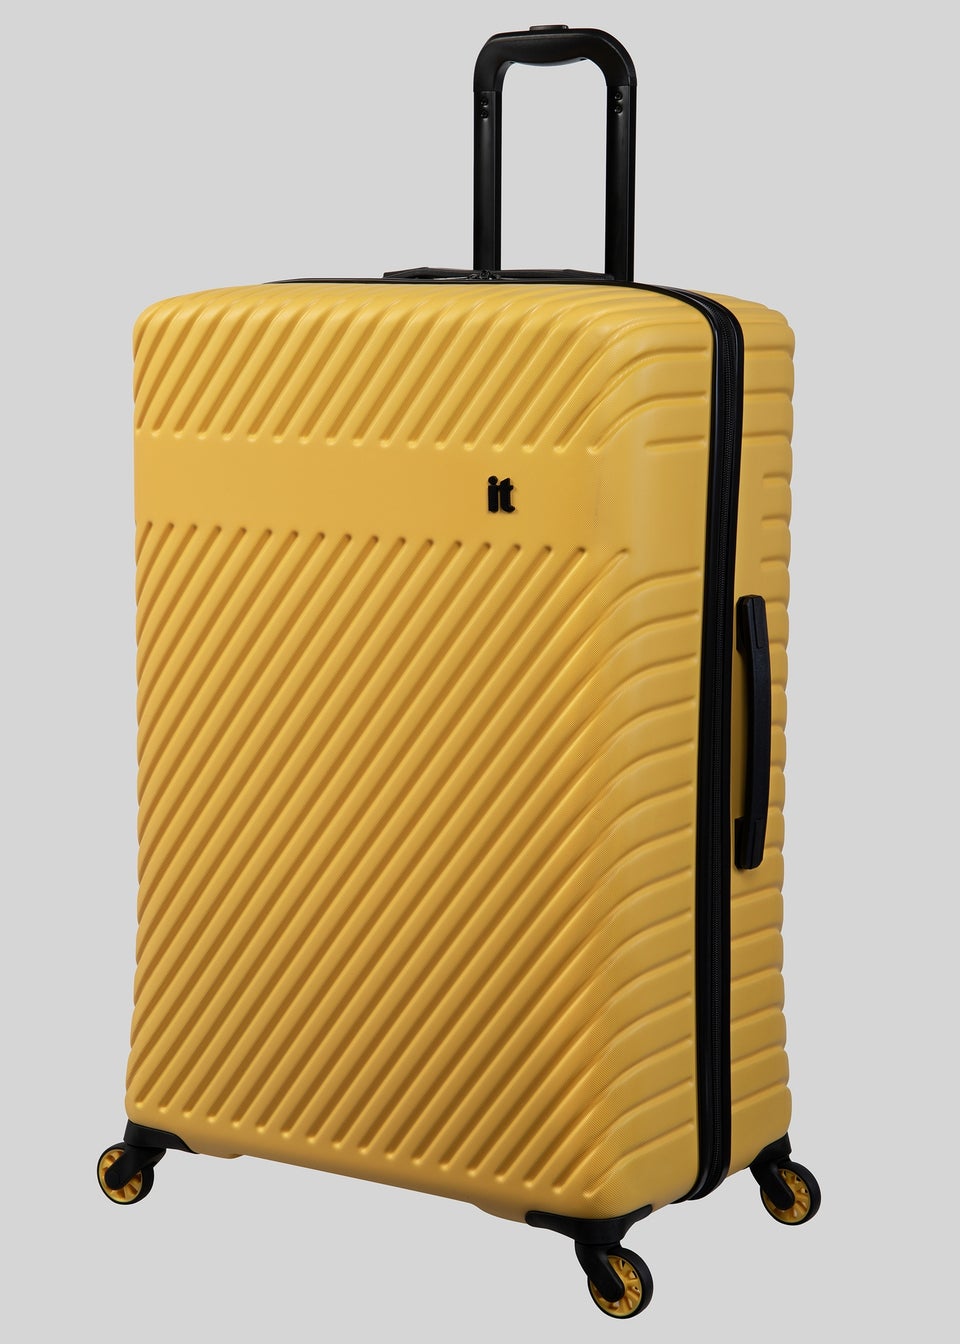 IT Luggage Yellow Hard Shell Suitcase